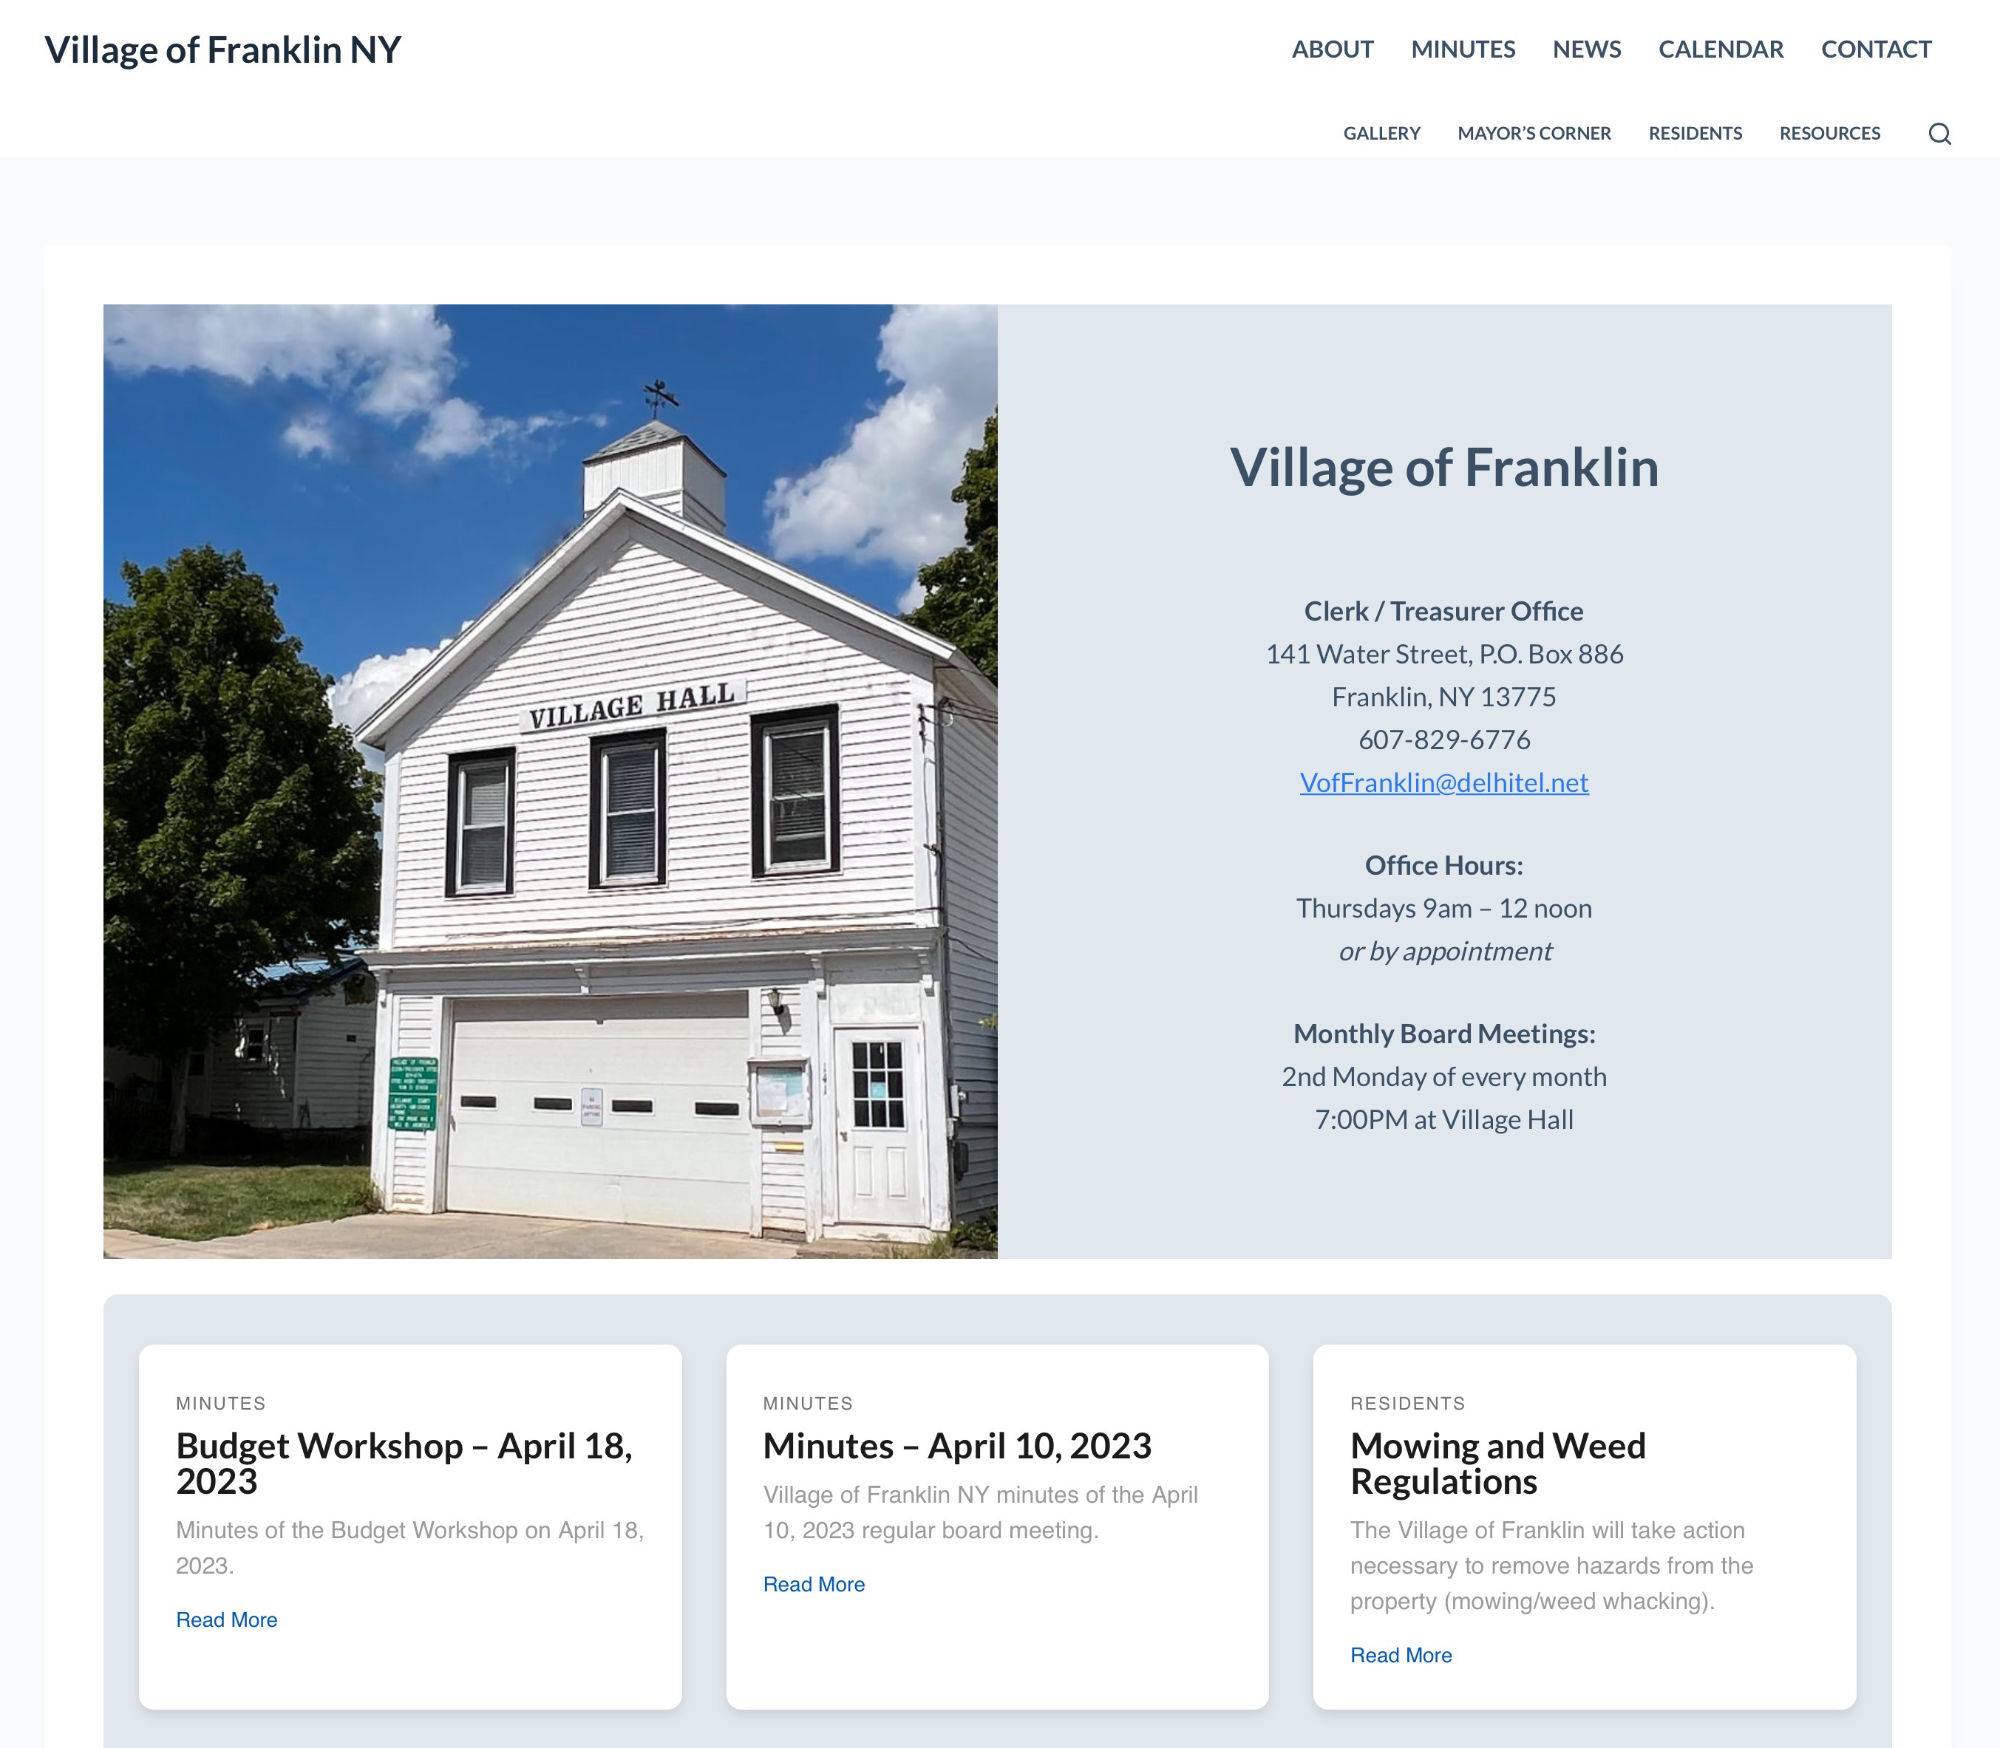 A government website for residents of the Village of Franklin NY.
Visit website villageoffranklinny.us